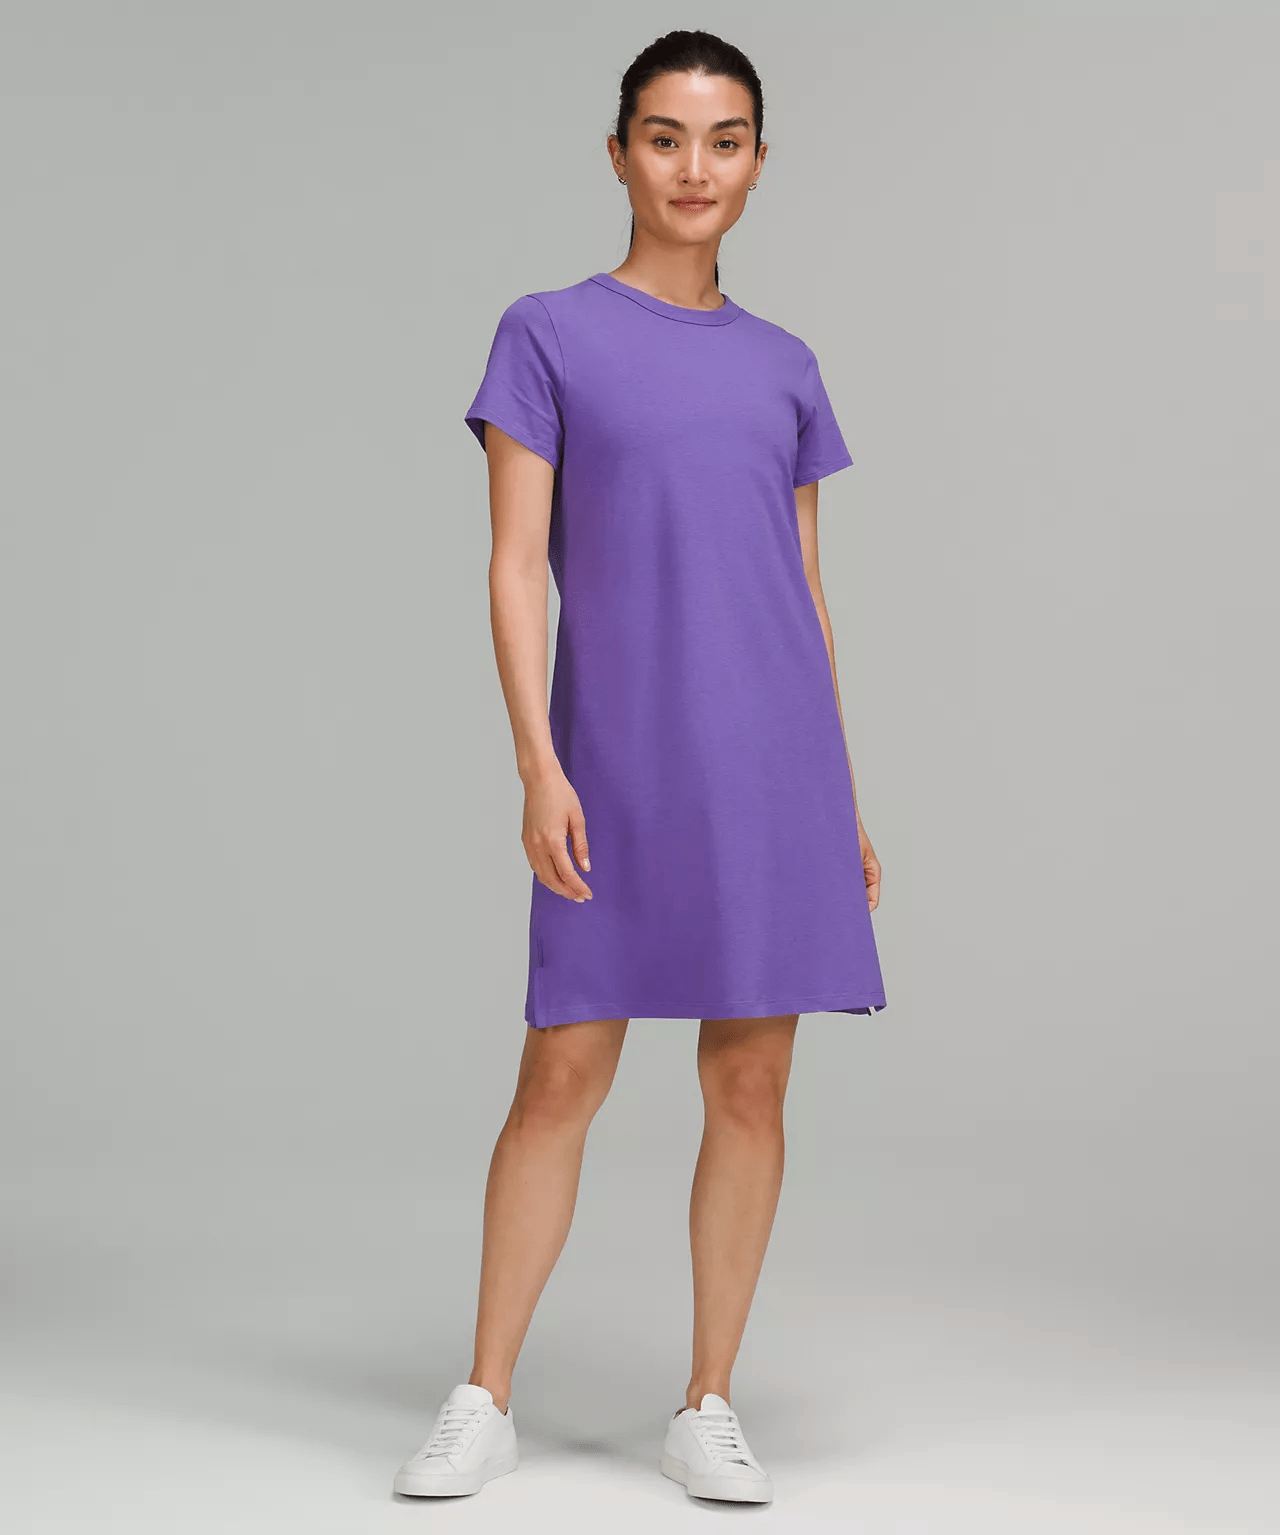 lululemon dress - Classic-Fit Cotton-Blend T-Shirt Dress